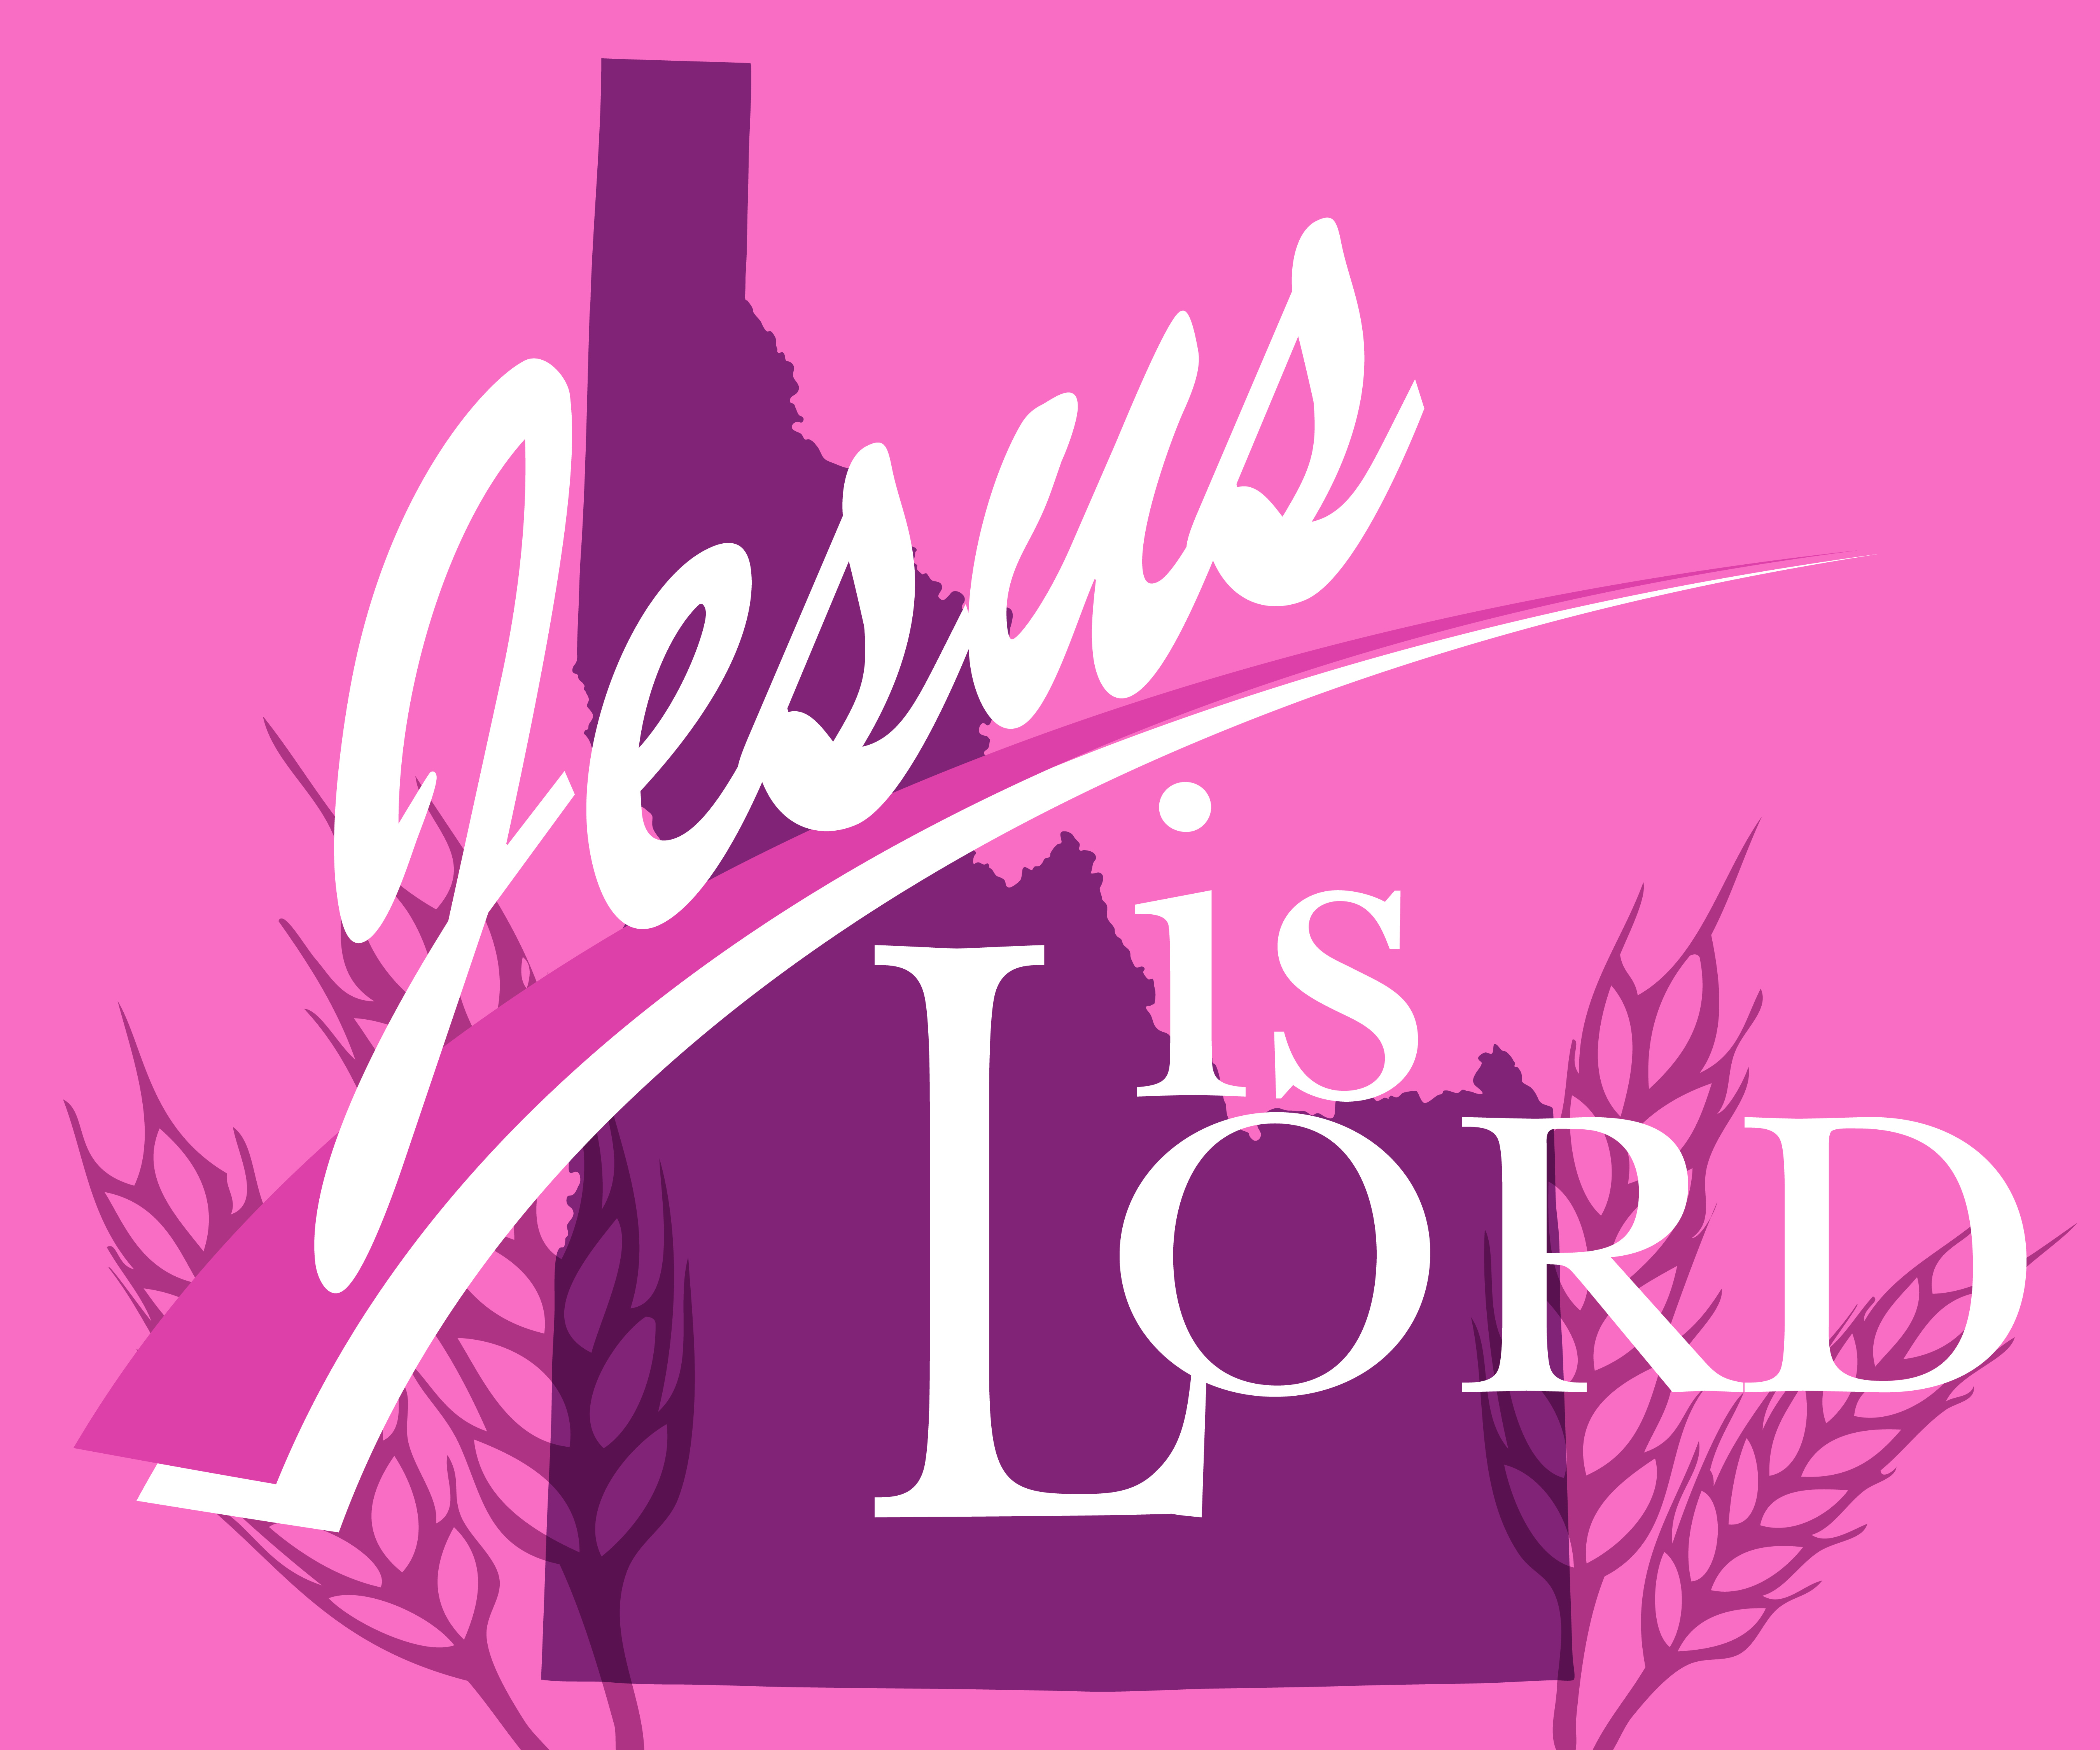 Jesus is Lord over Idaho!